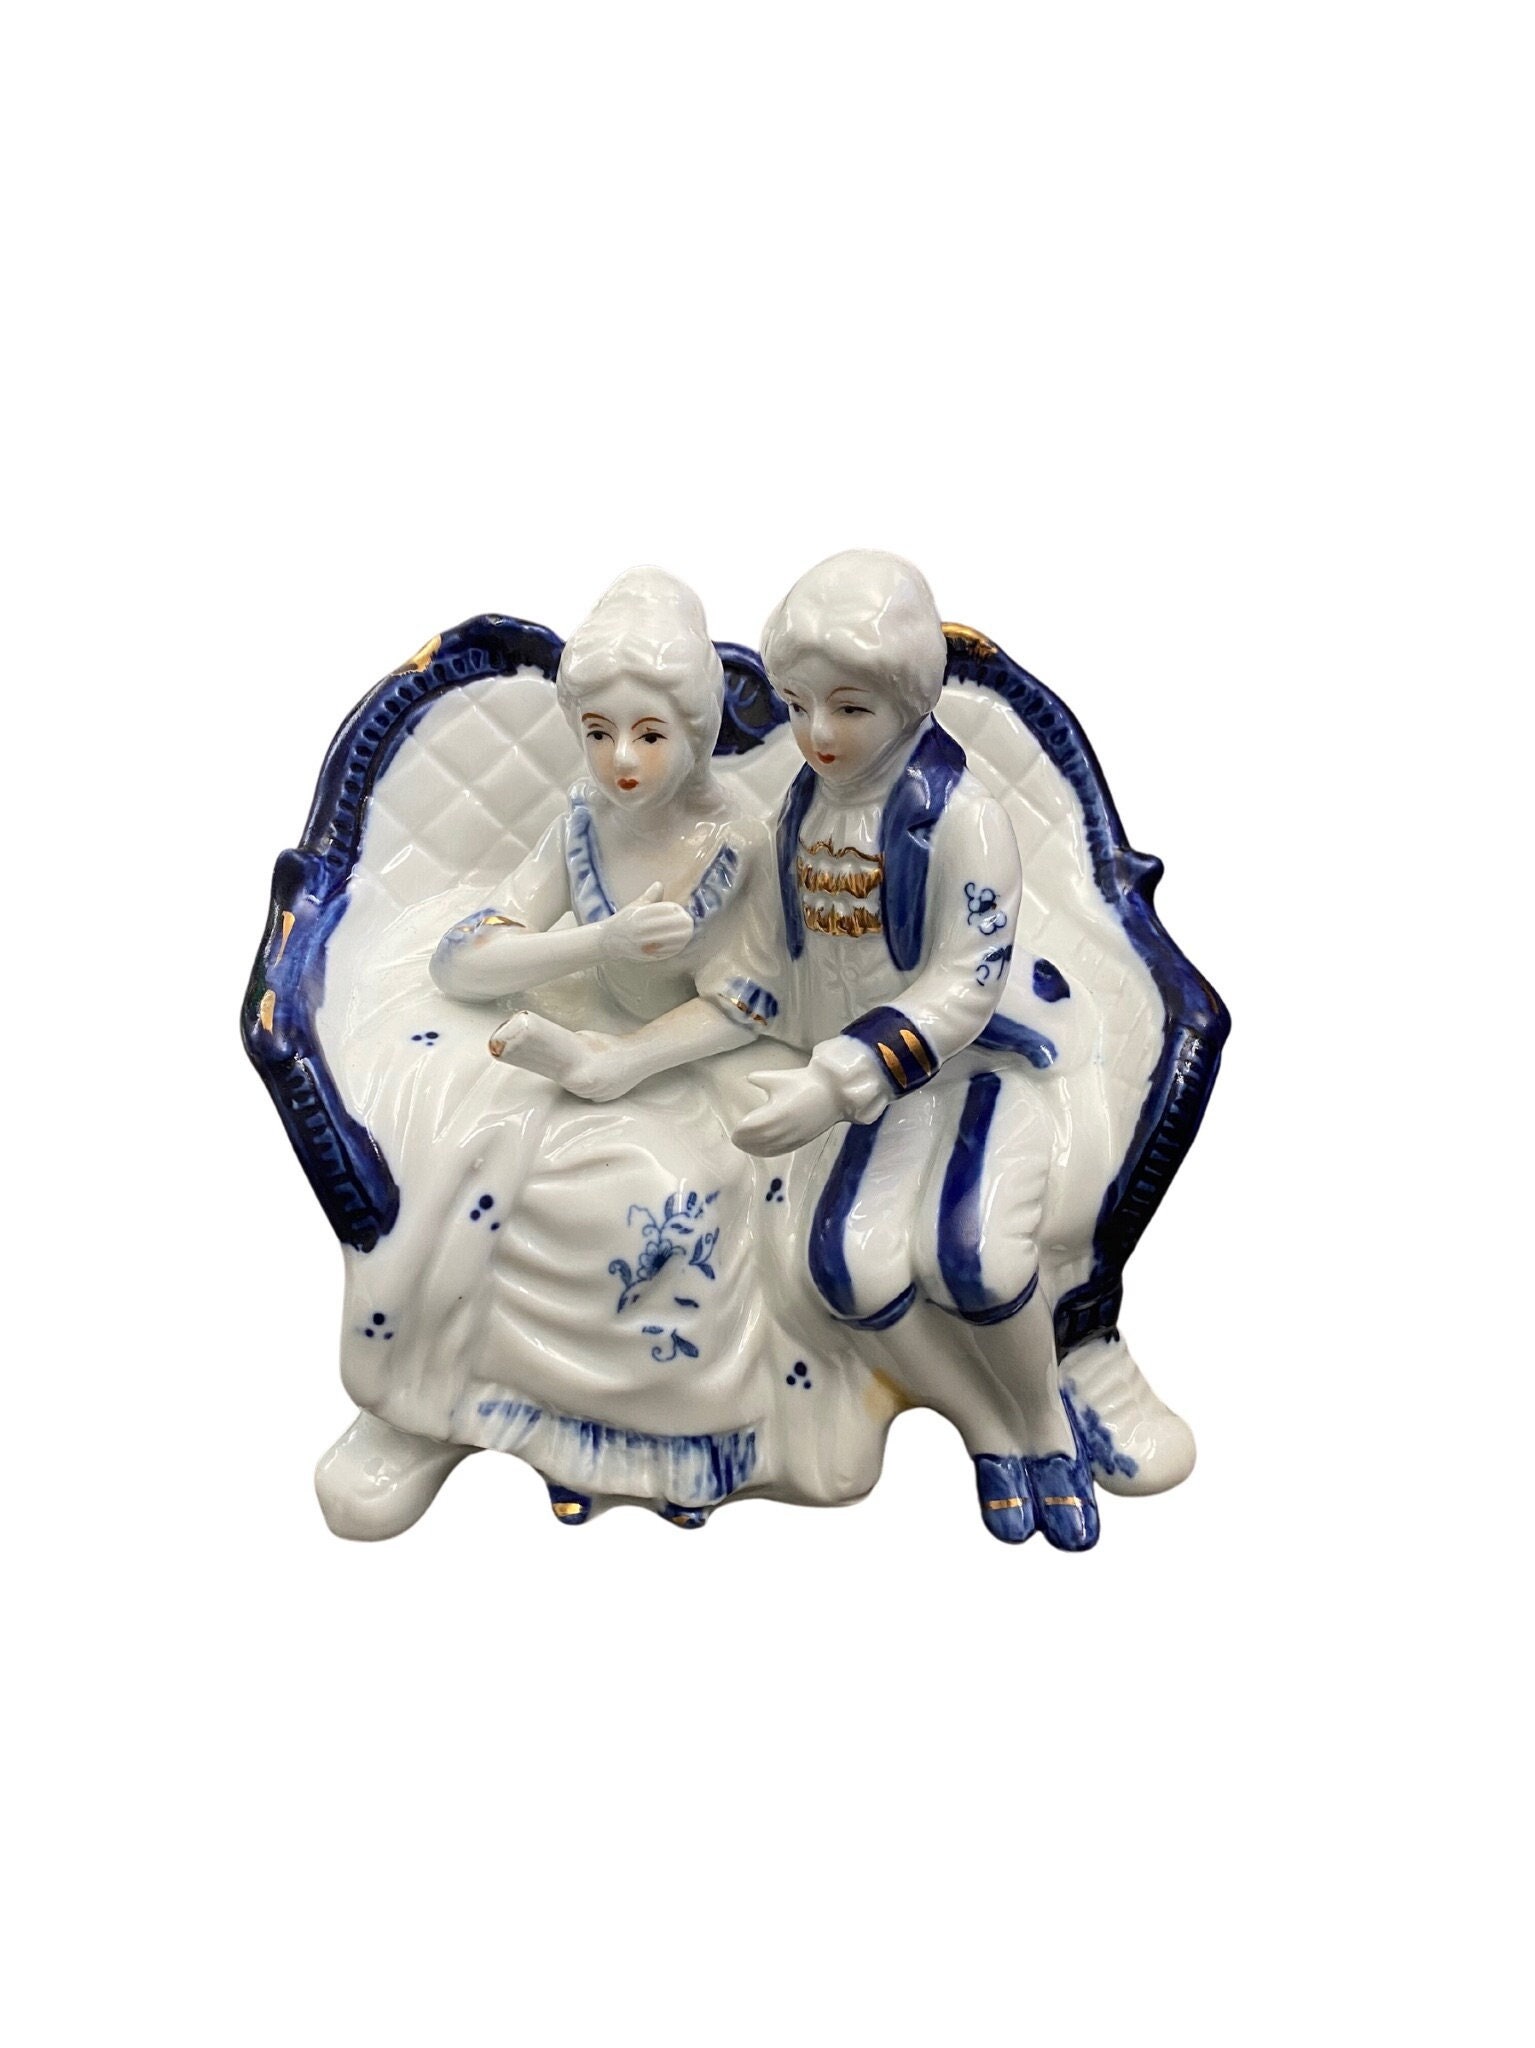 STUNNING VINTAGE SET of Figurines/Ornaments in blue & white porcelain 